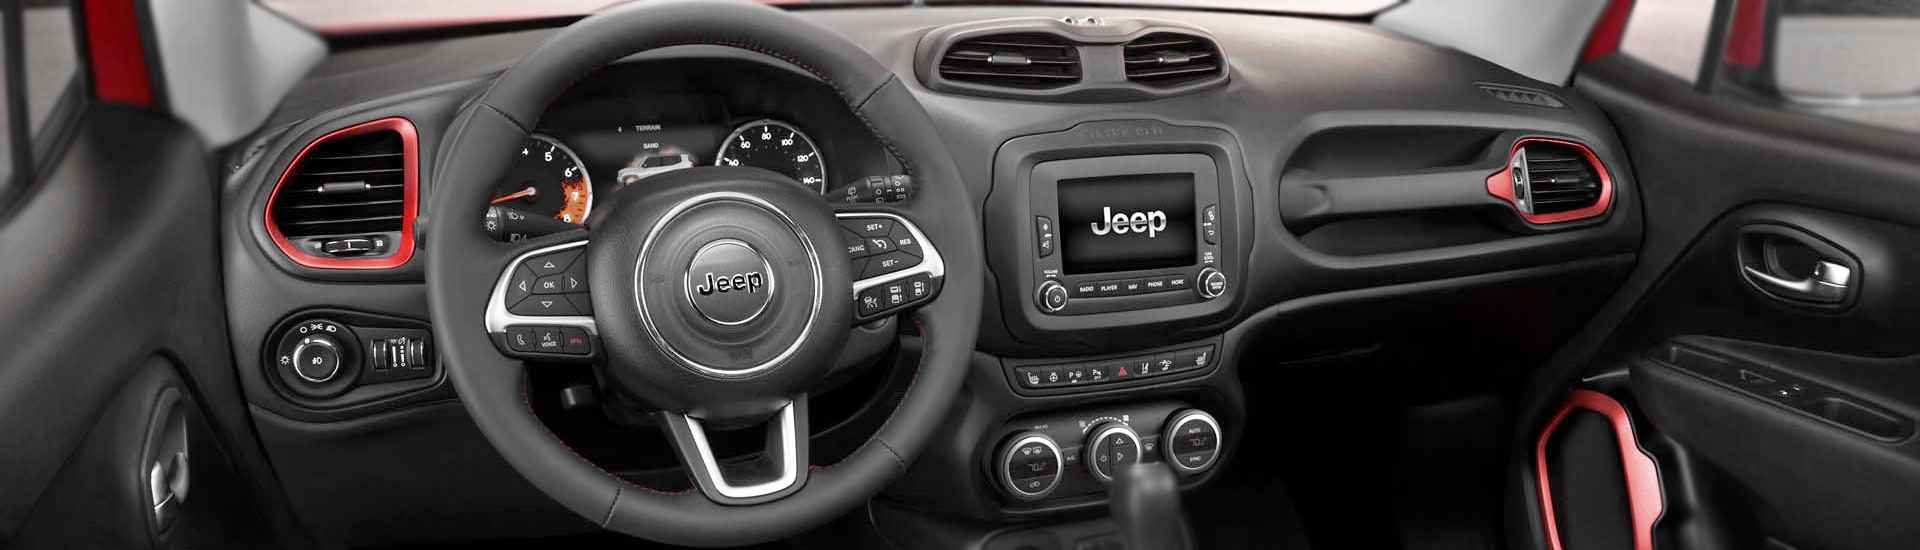 Jeep Compass Custom Dash Kits